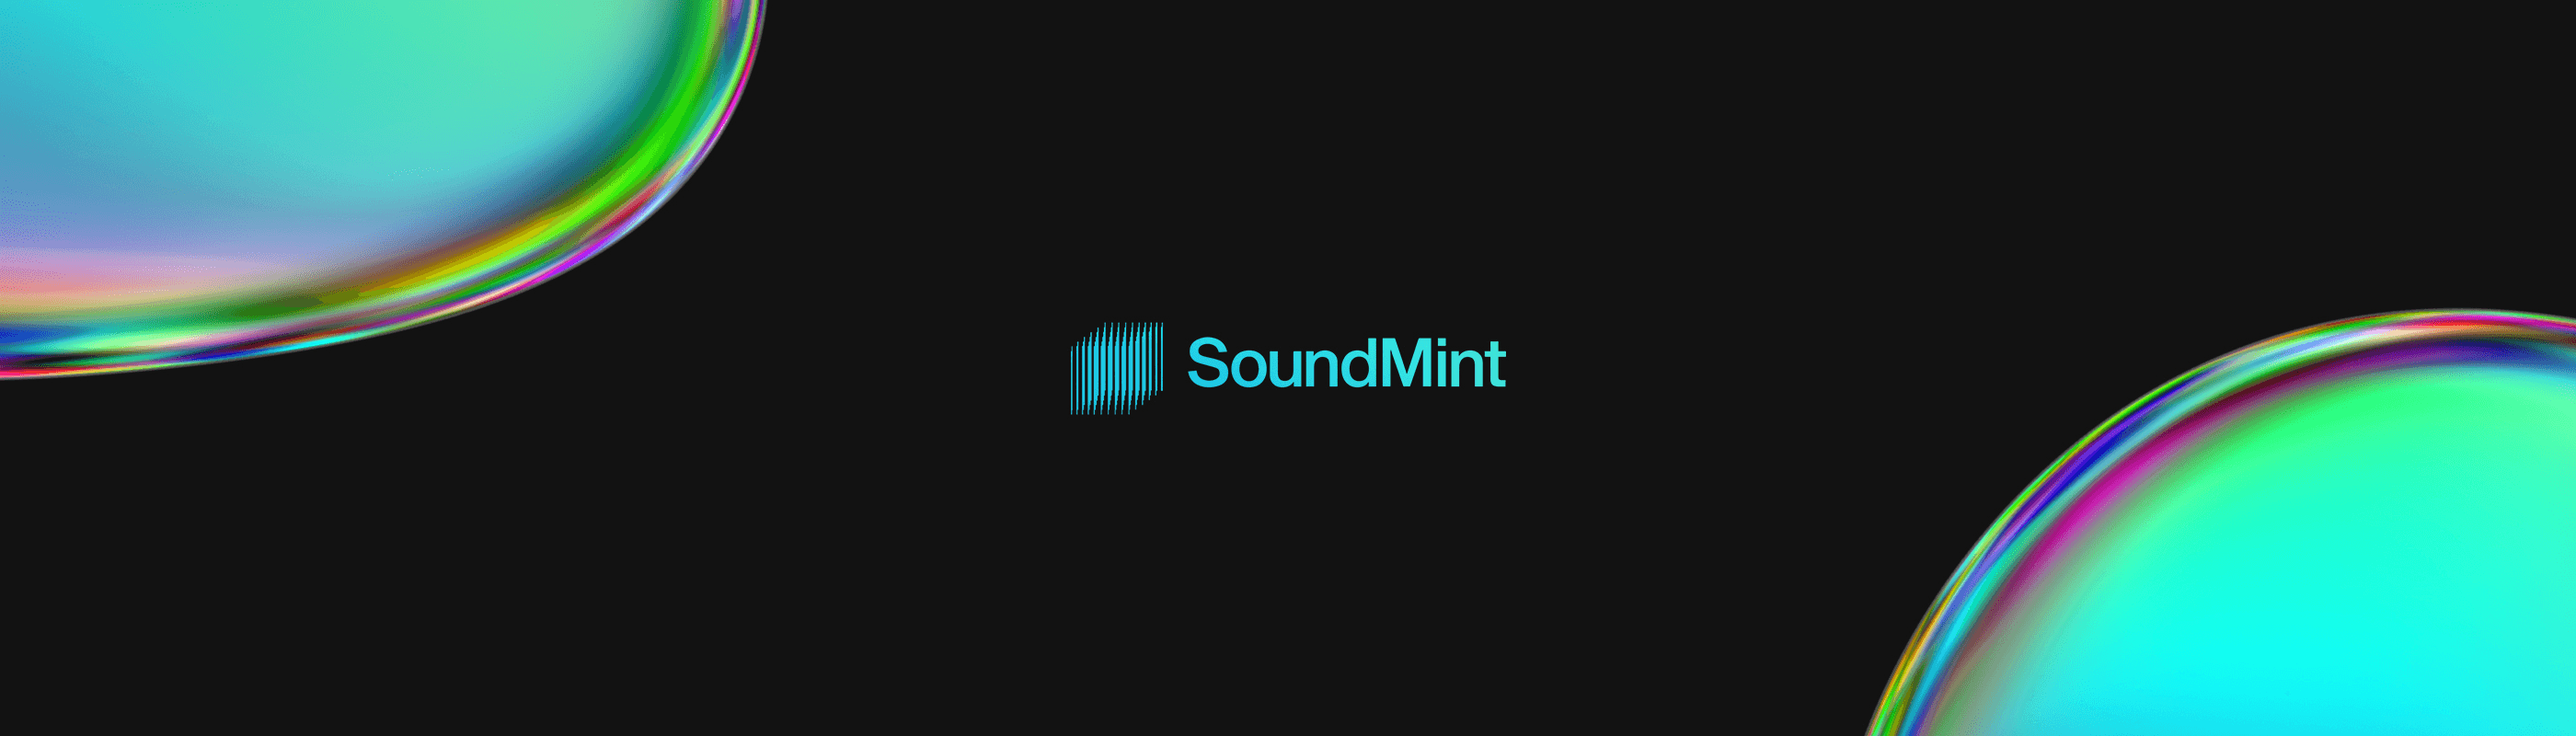 SoundMint banner